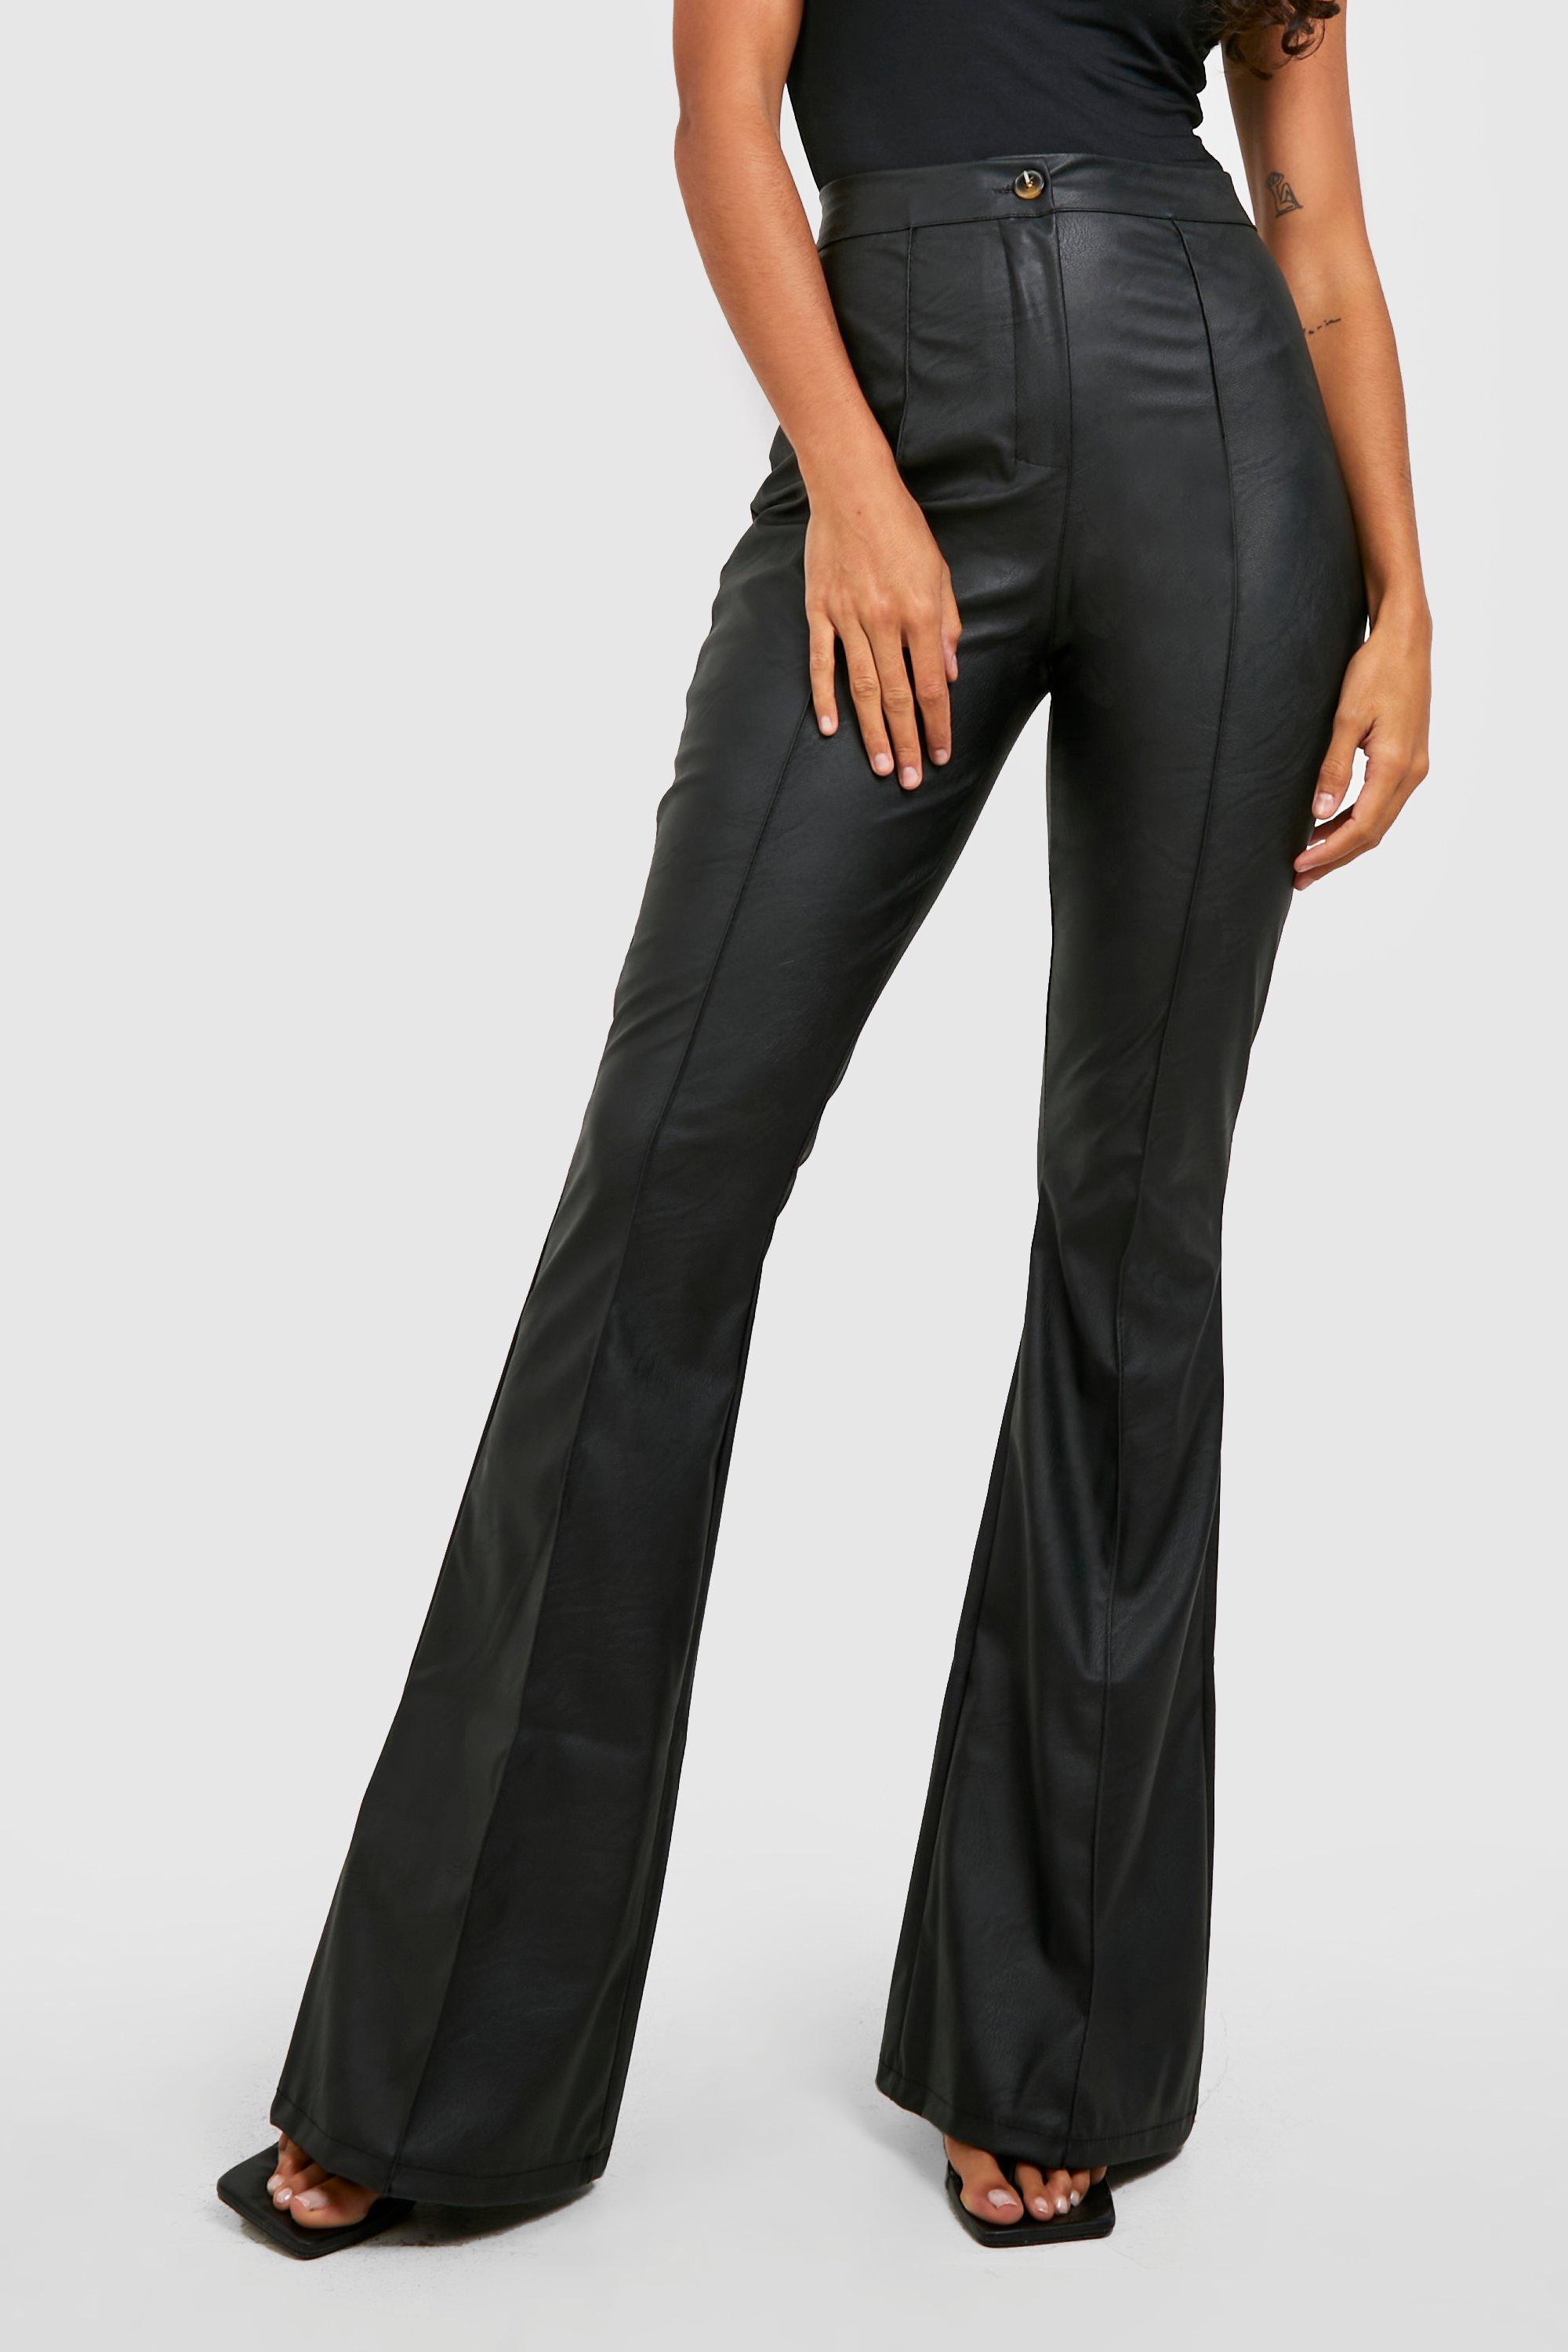 https://media.boohoo.com/i/boohoo/fzz33609_black_xl_3/female-black-high-waisted-faux-leather-flared-pants